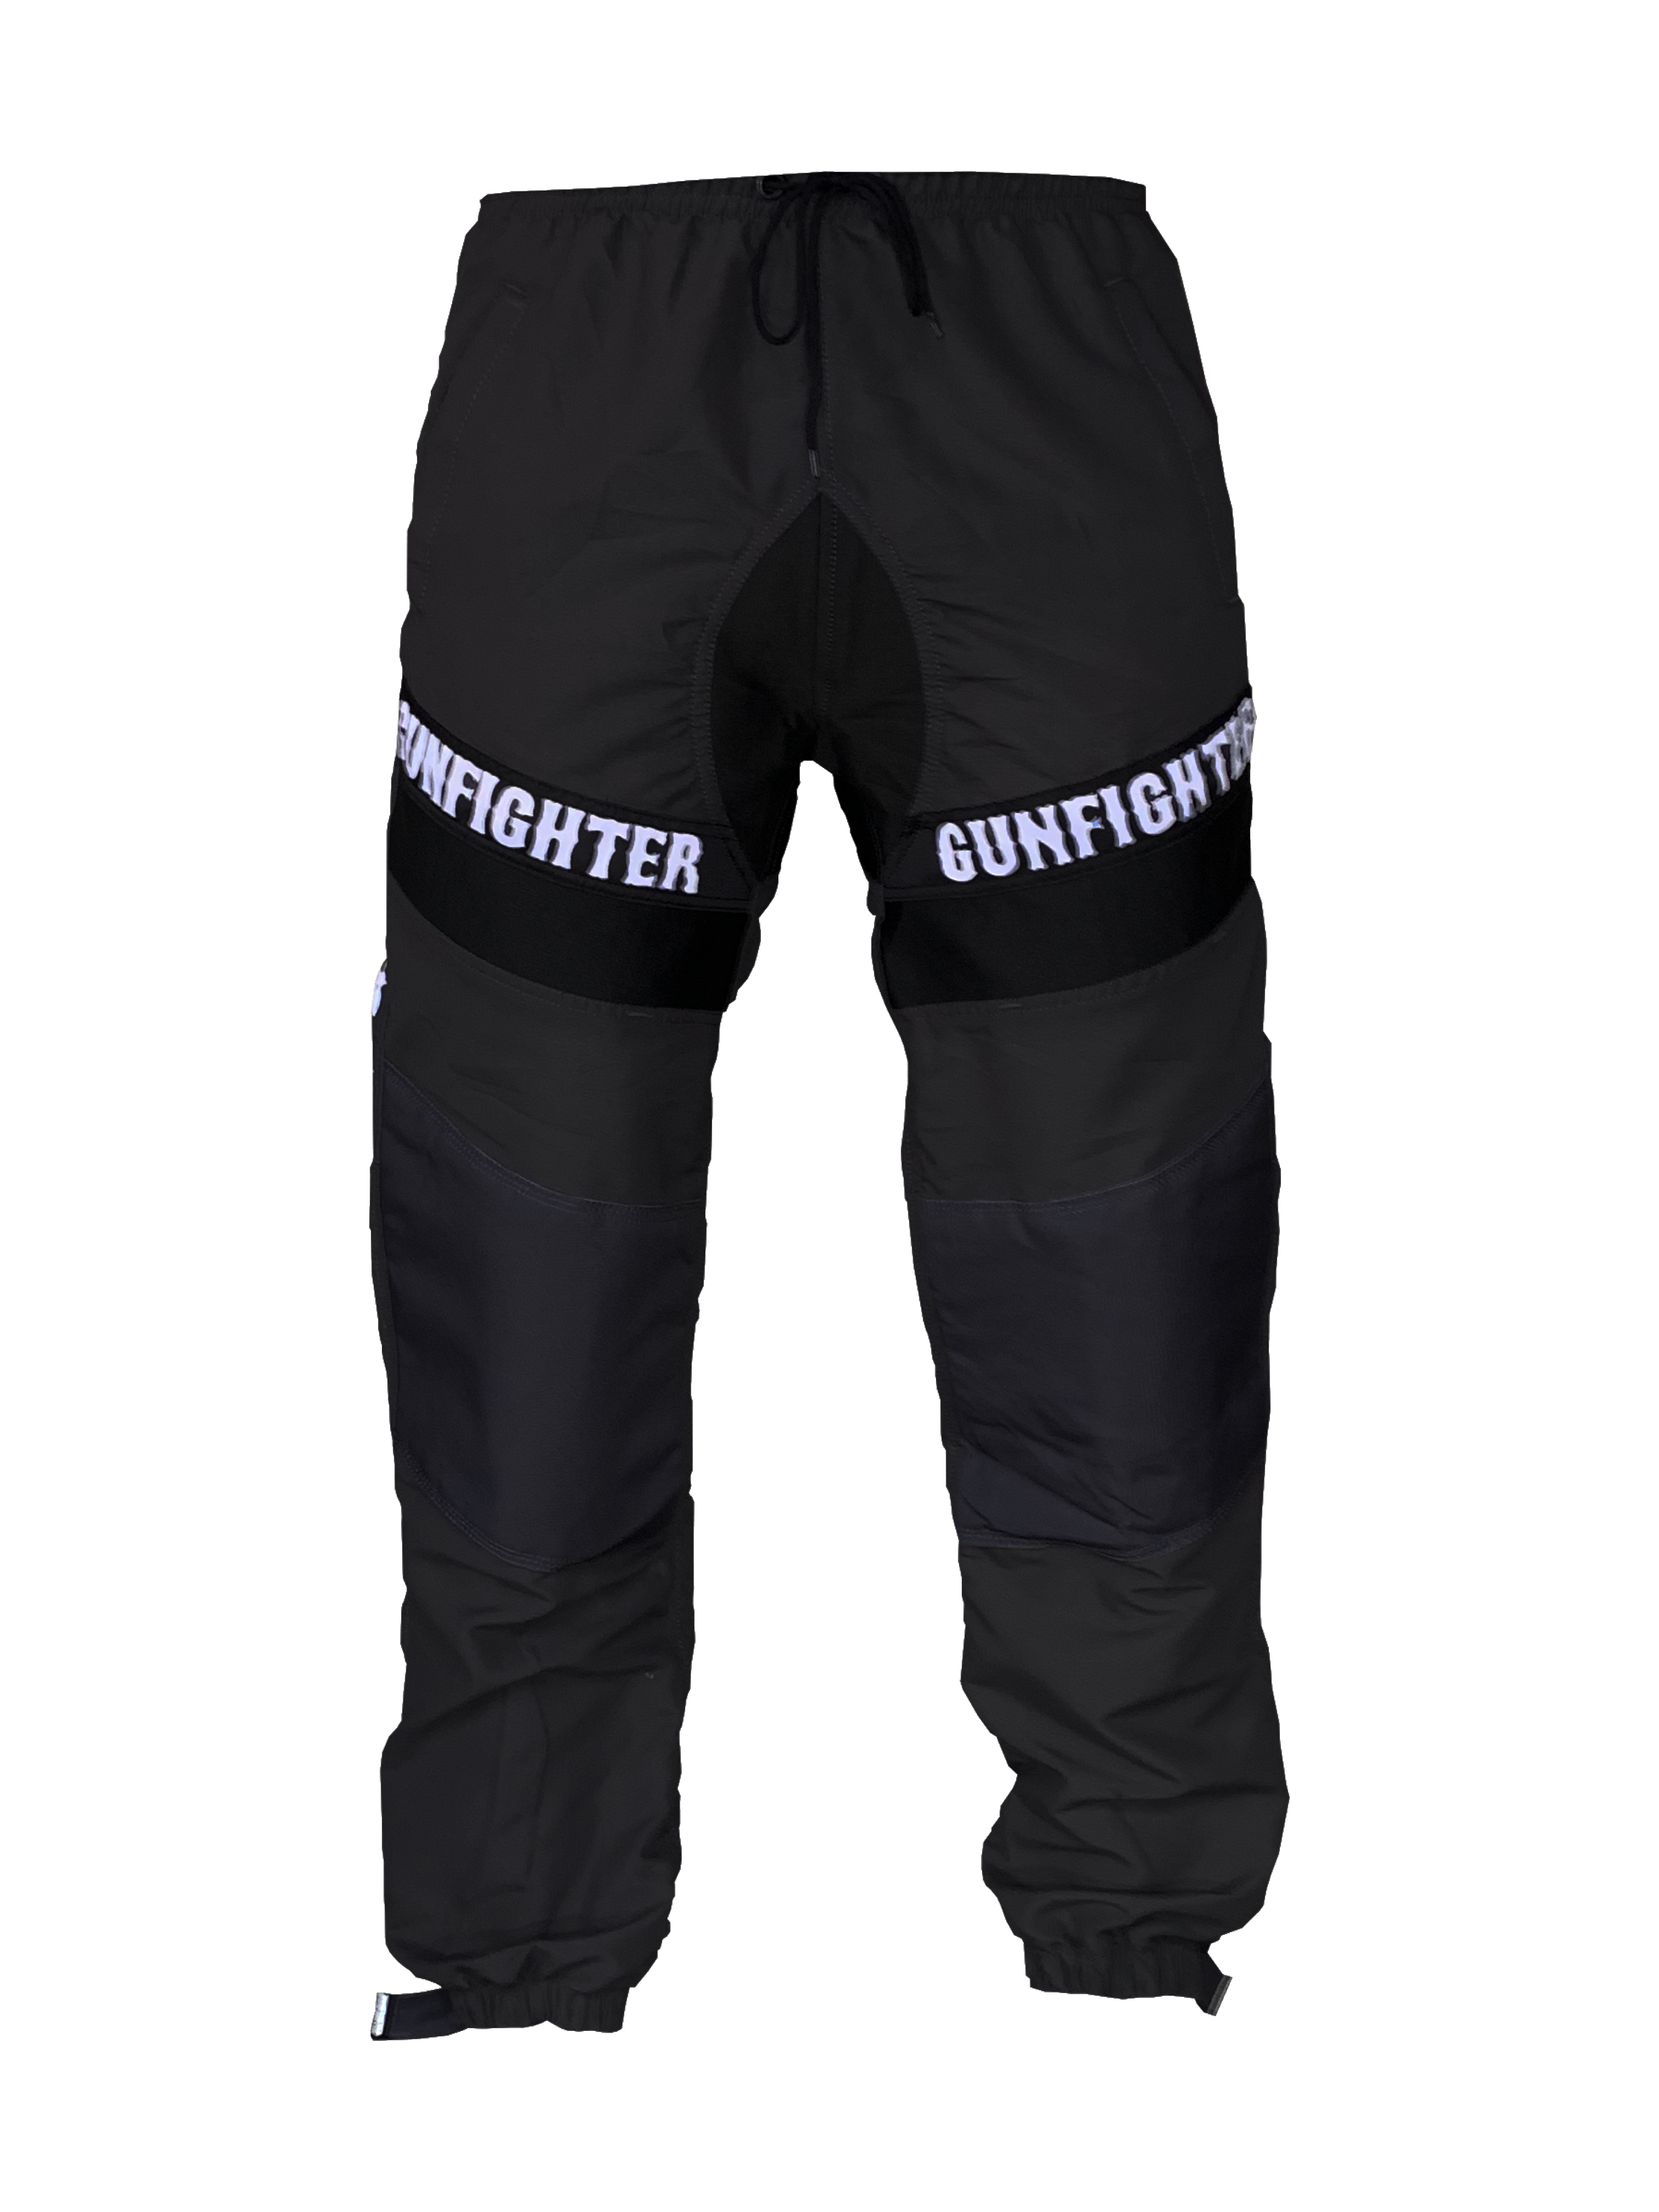 Gunfighter Sports OUTLAW Jogger - BLACK